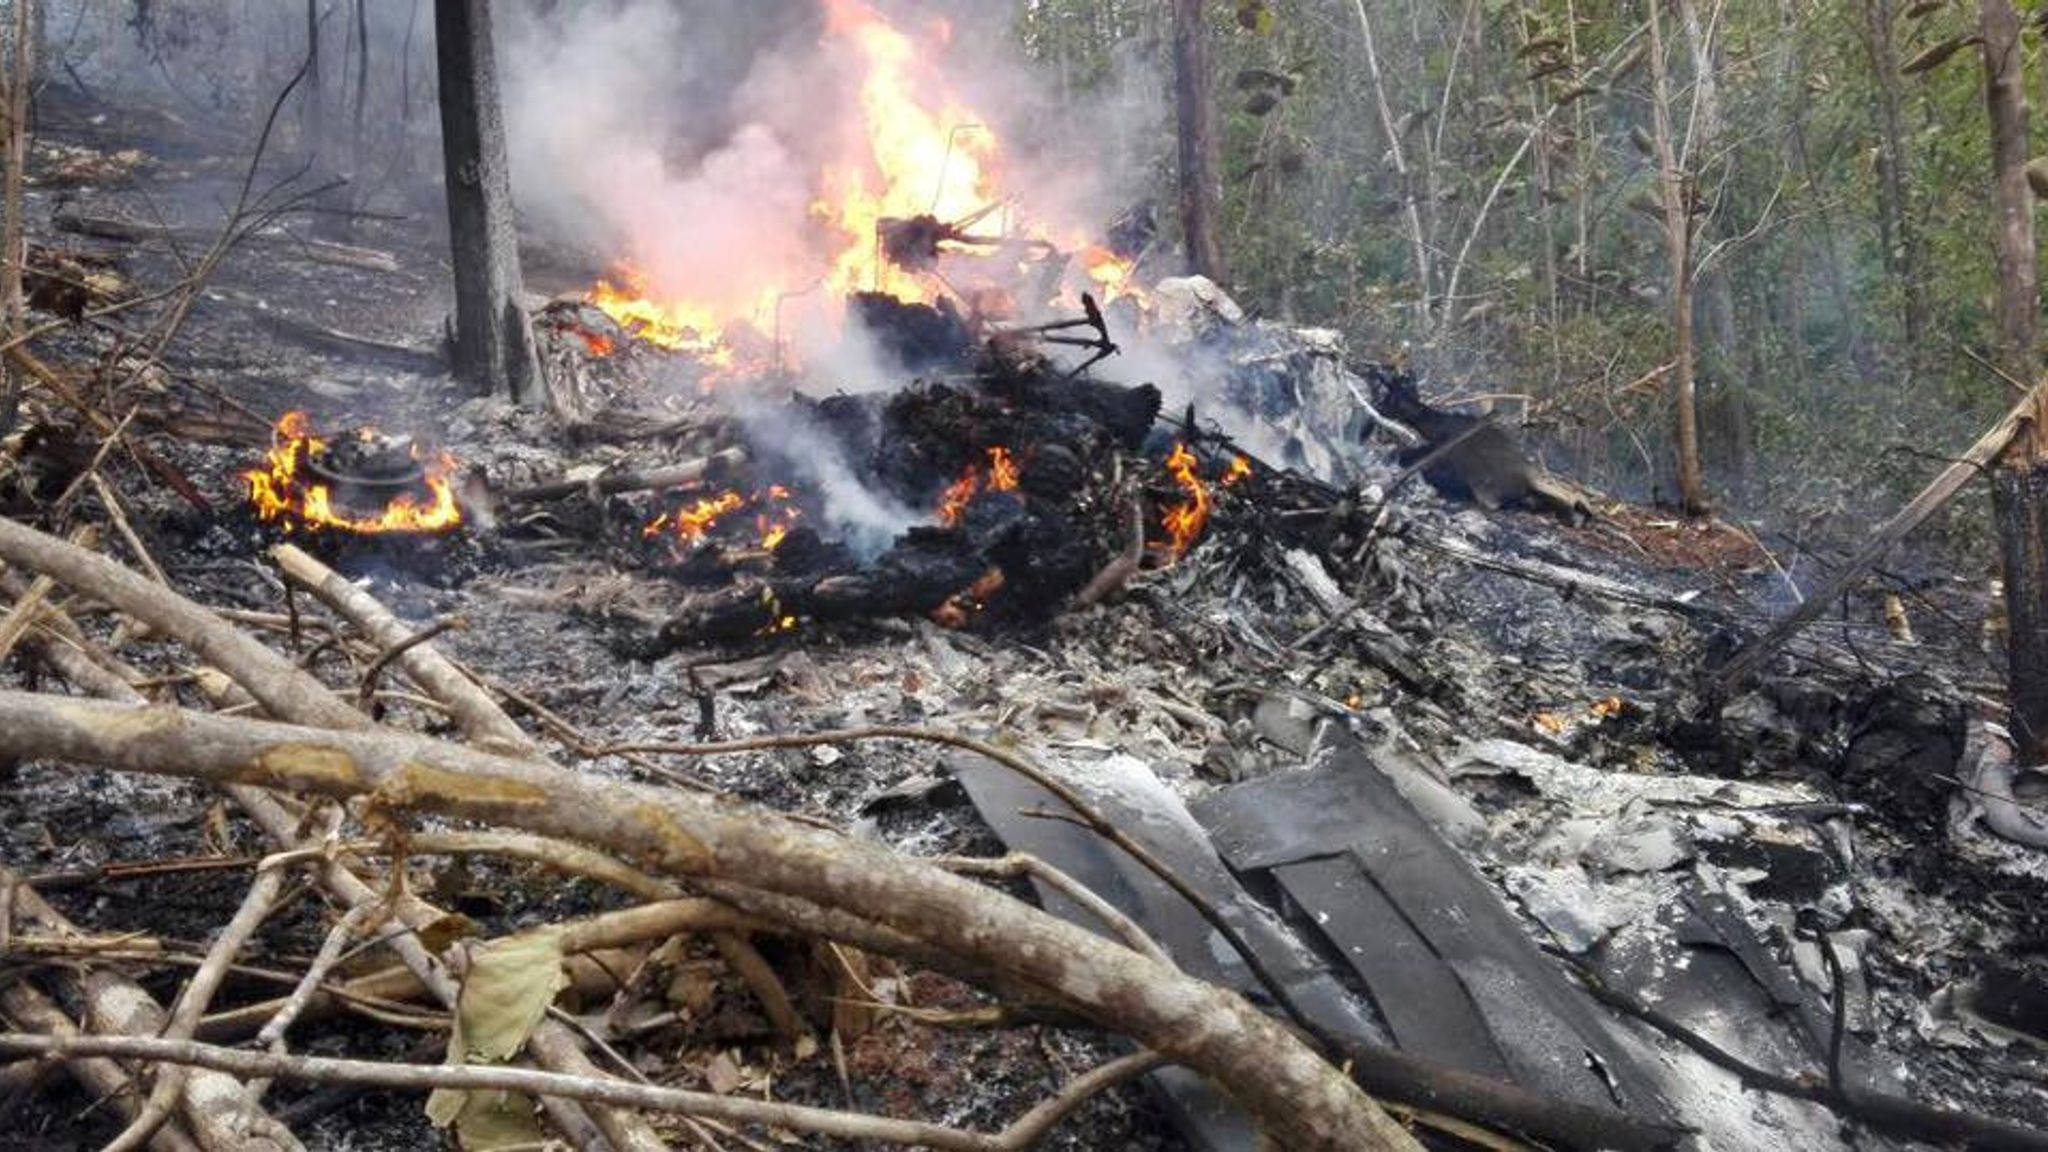 Tourists among 12 killed in Costa Rica plane crash World News Sky News